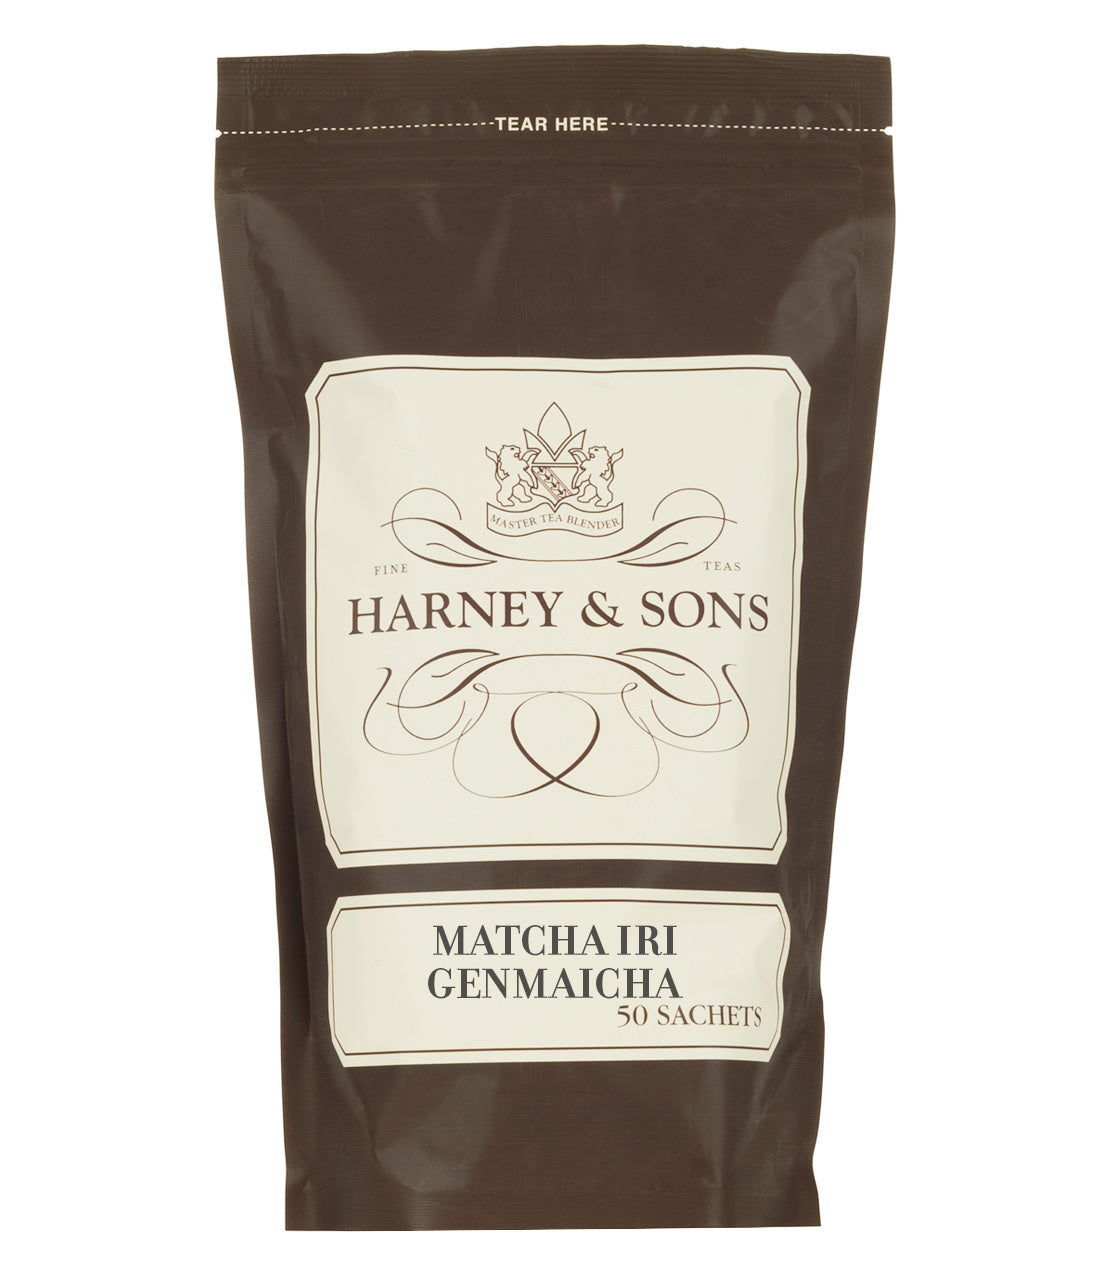 Matcha iri Genmaicha - Sachets Bag of 50 Sachets - Harney & Sons Fine Teas